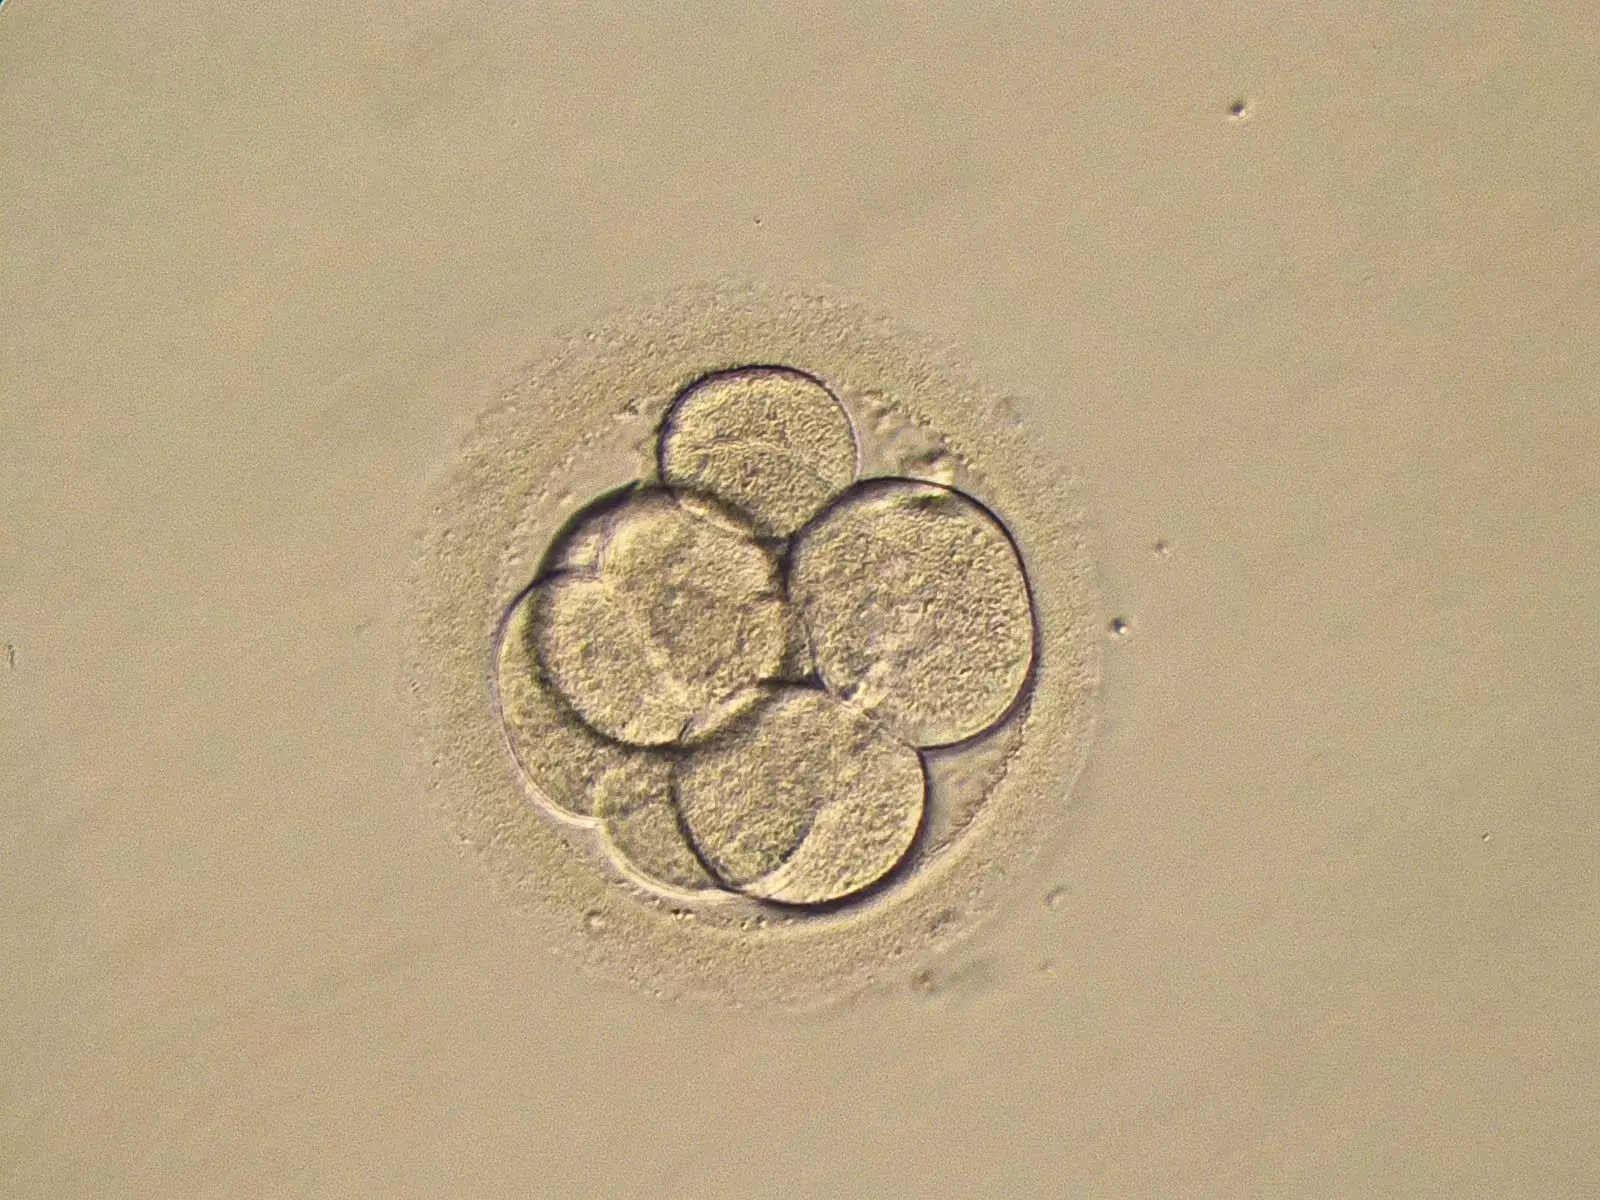 Human embryo.